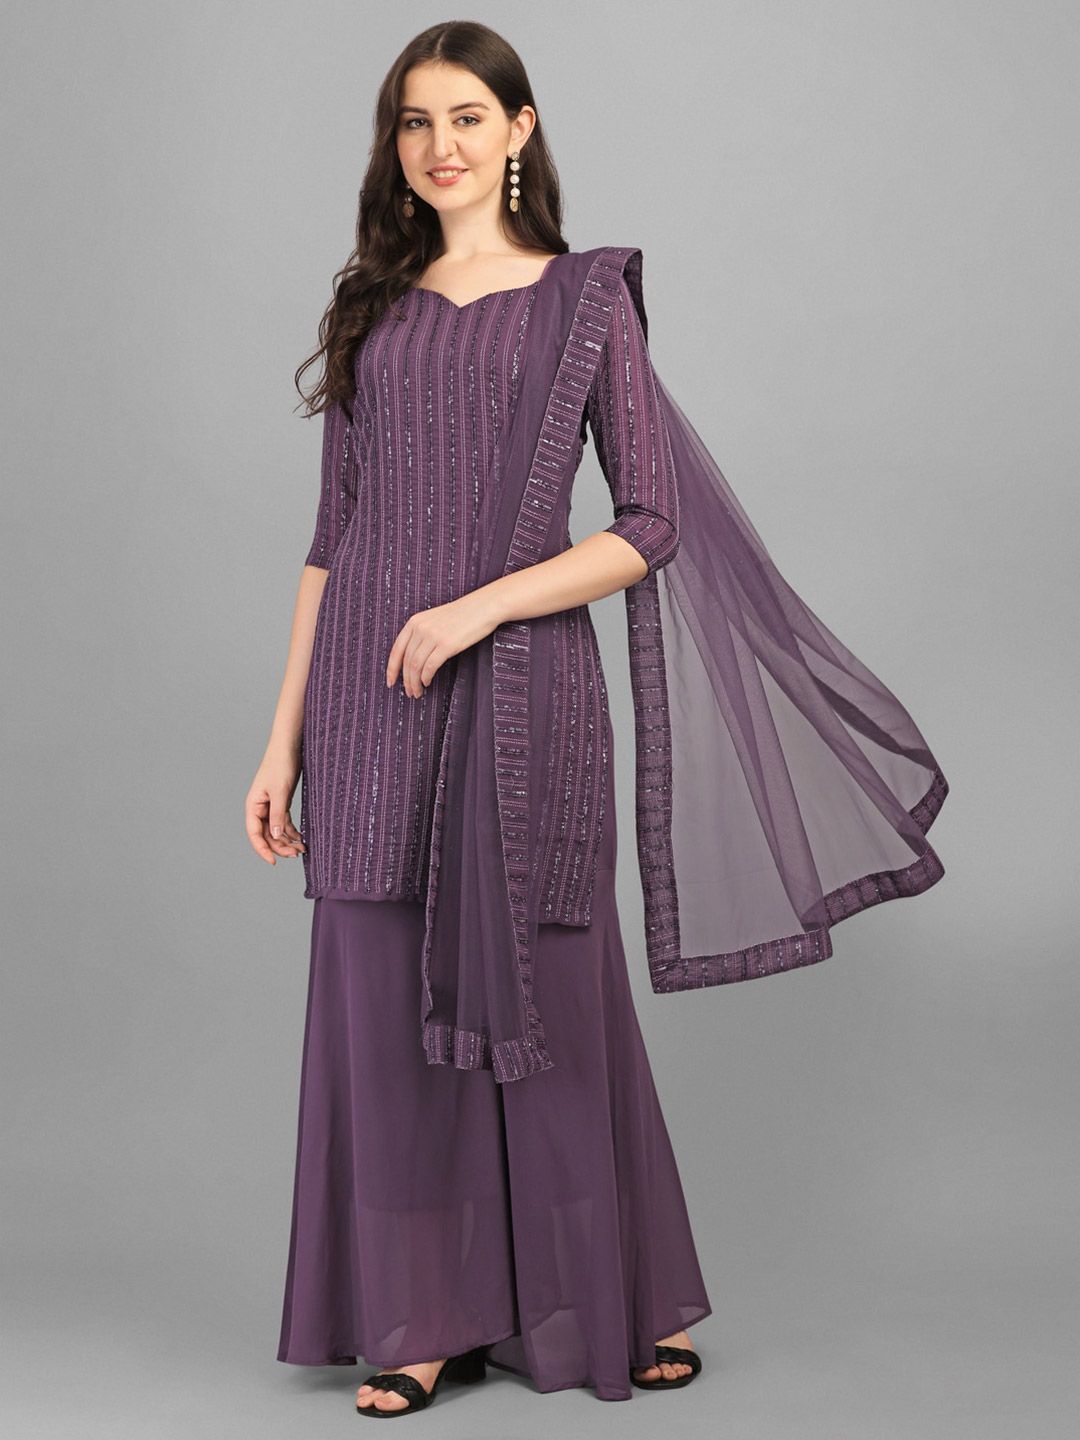 JATRIQQ Lavender Embroidered Silk Georgette Semi-Stitched Dress Material Price in India